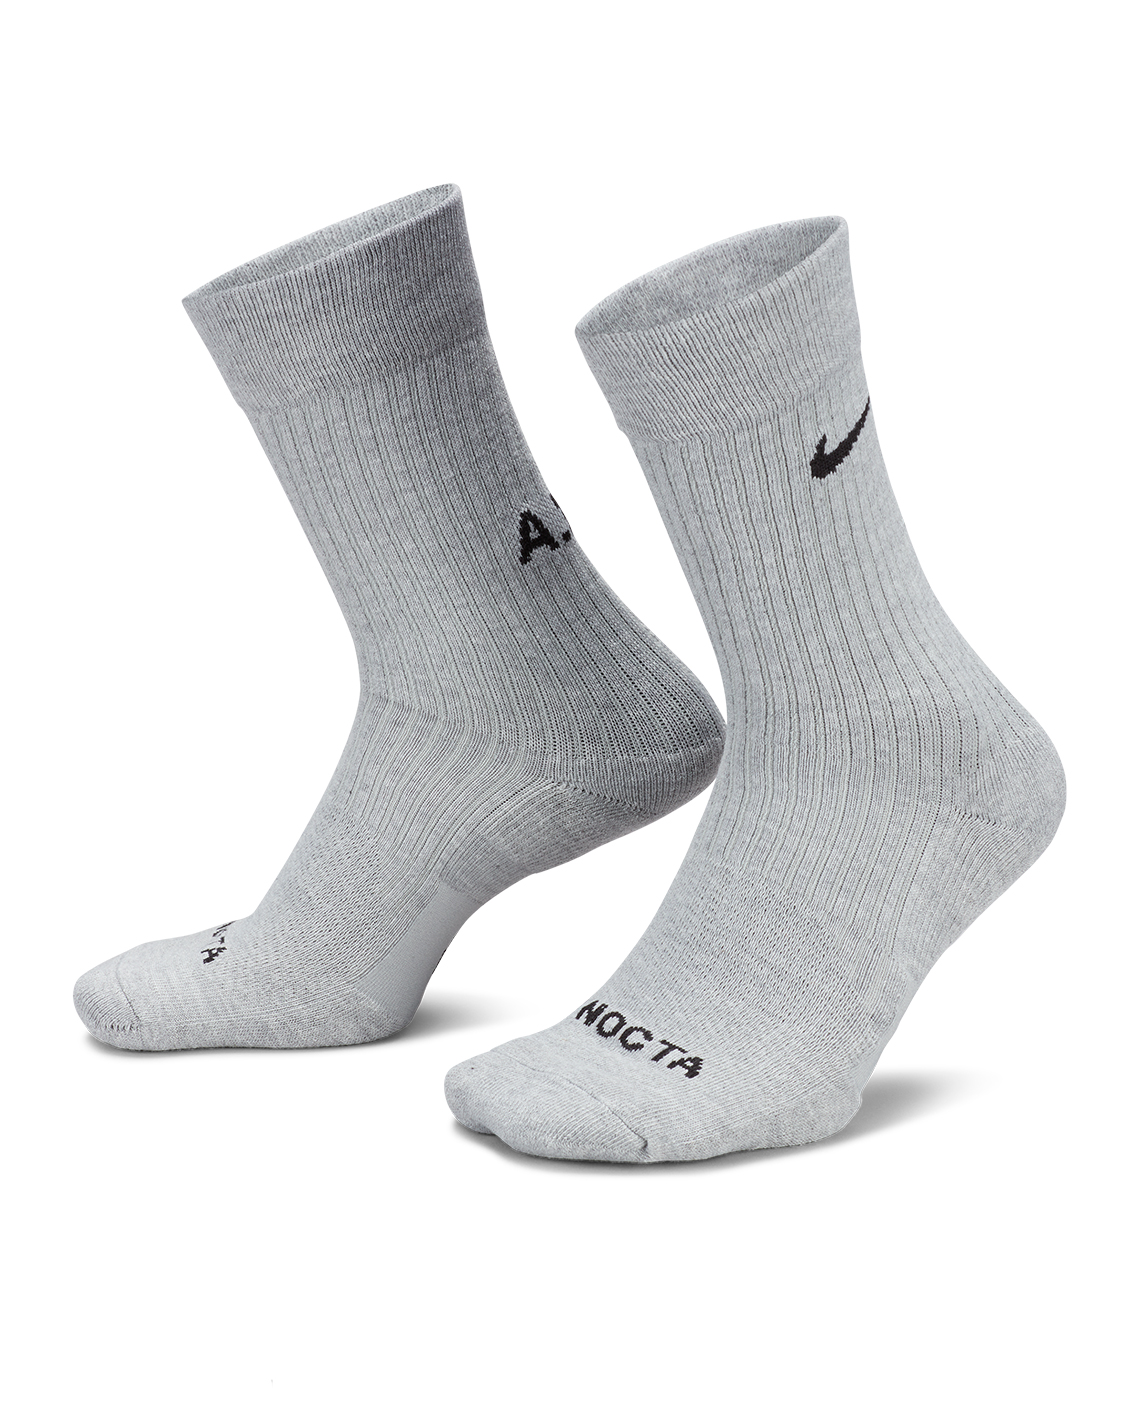 Dd9240 902 Nike Nocta Distant Regards Socks